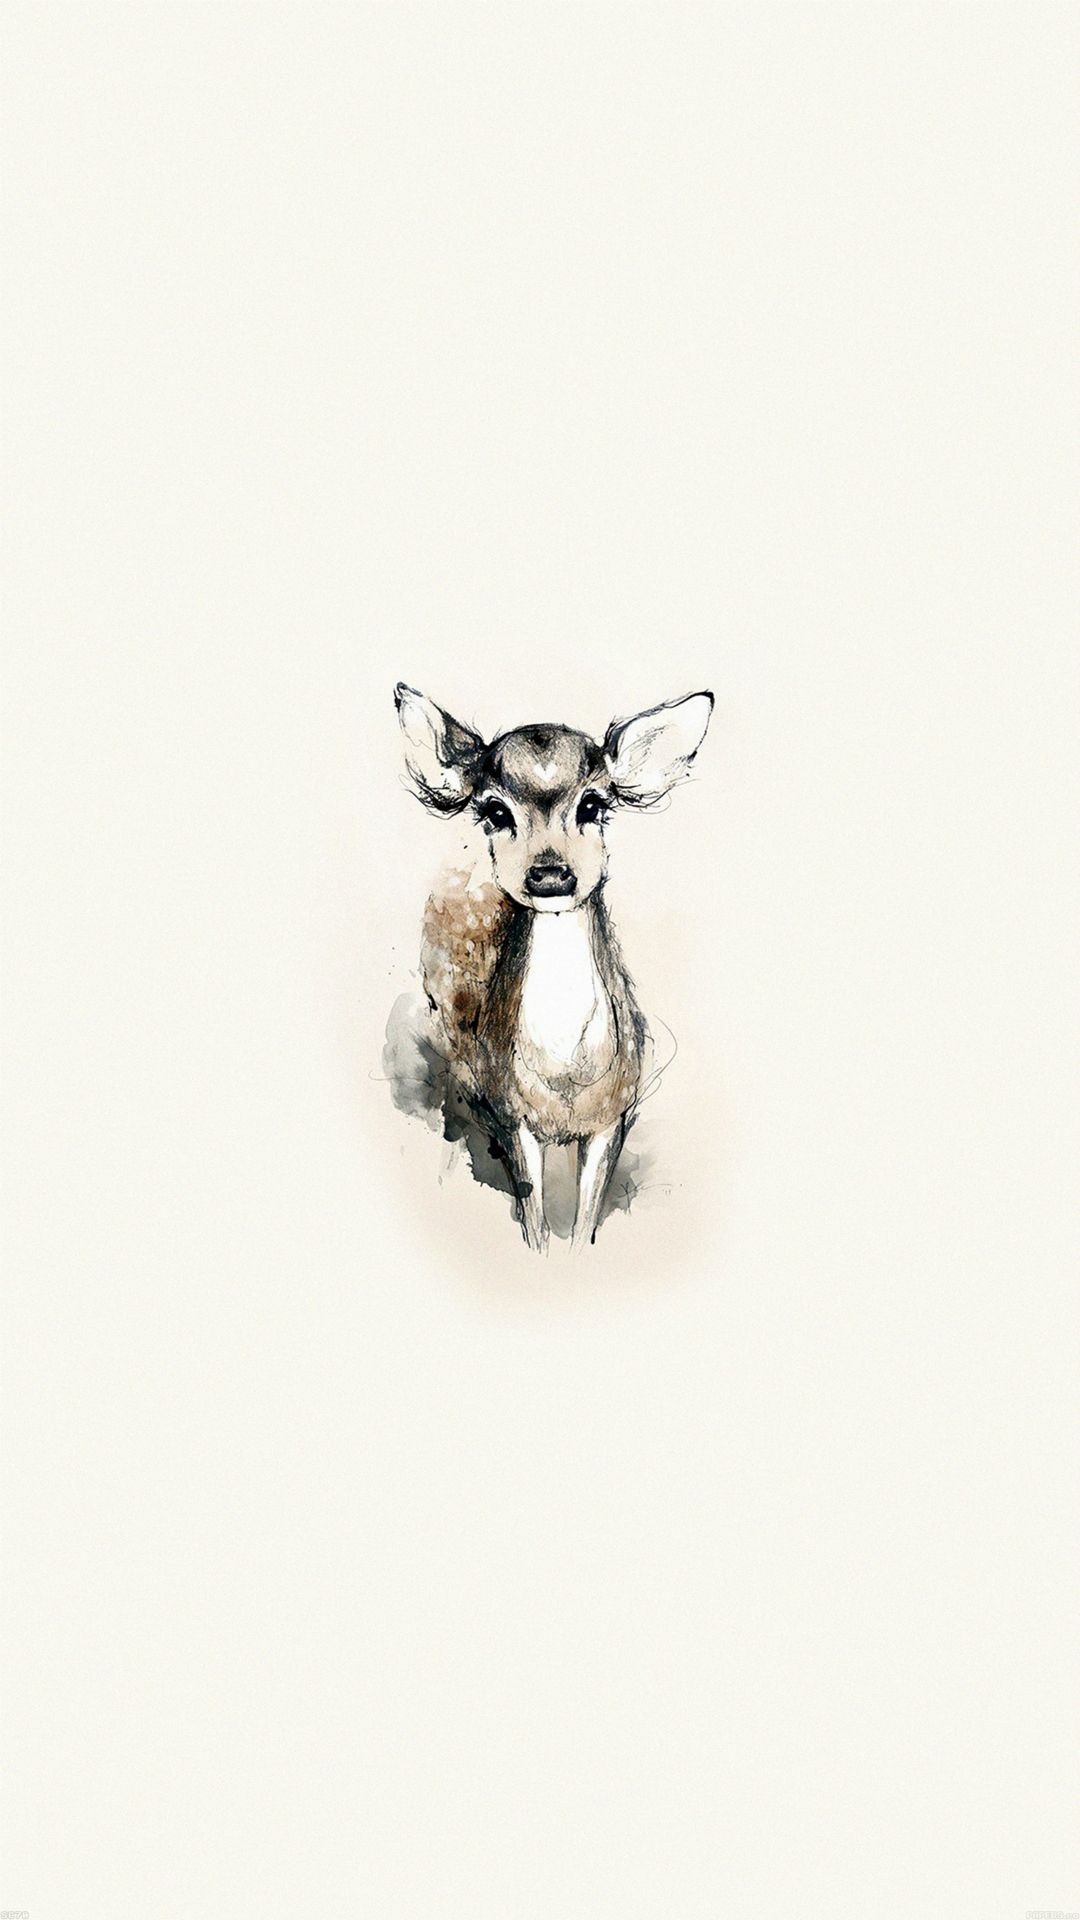 Tiny Deer Illustration IPhone 6 Wallpaper Download. IPhone Wallpaper, IPad Wallpaper One Stop Download. Deer Illustration, IPhone 6 Wallpaper, Deer Wallpaper